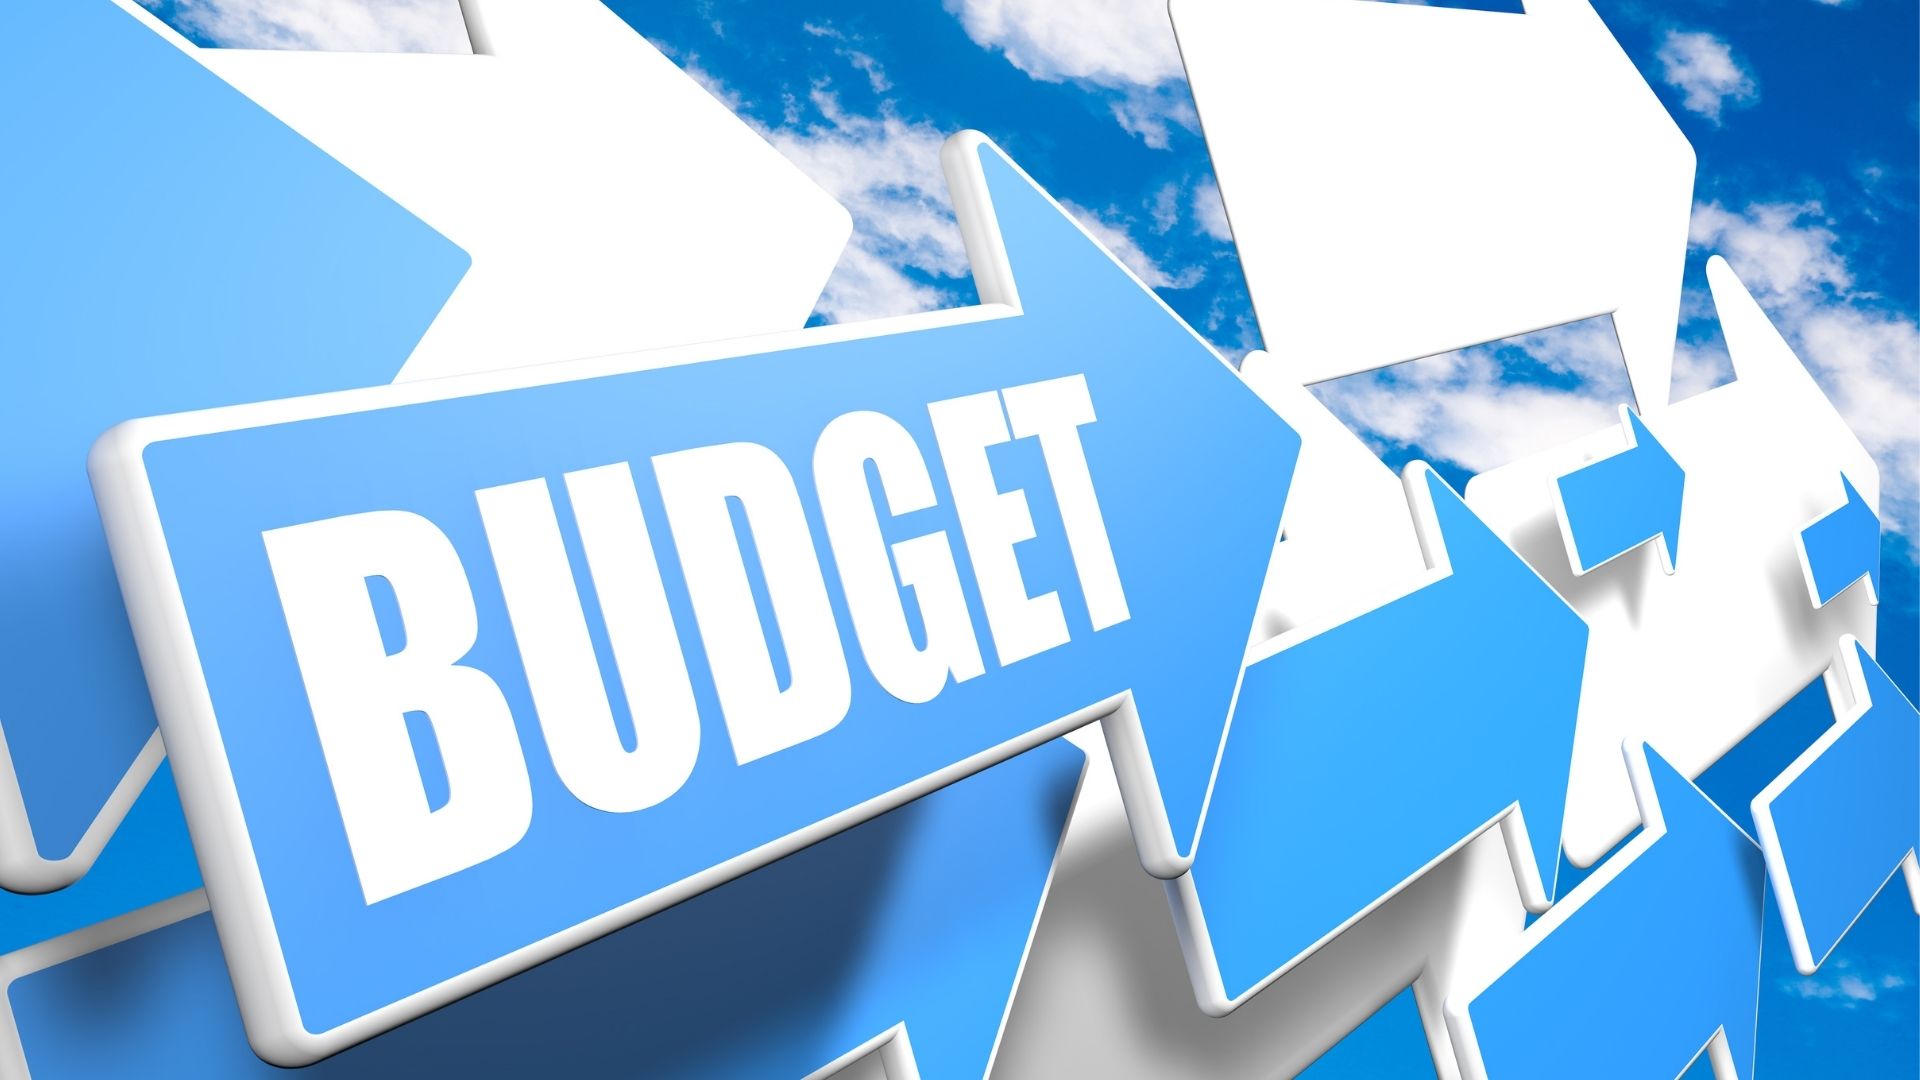 Irish Exporters Association publish Budget 2022 recommendations